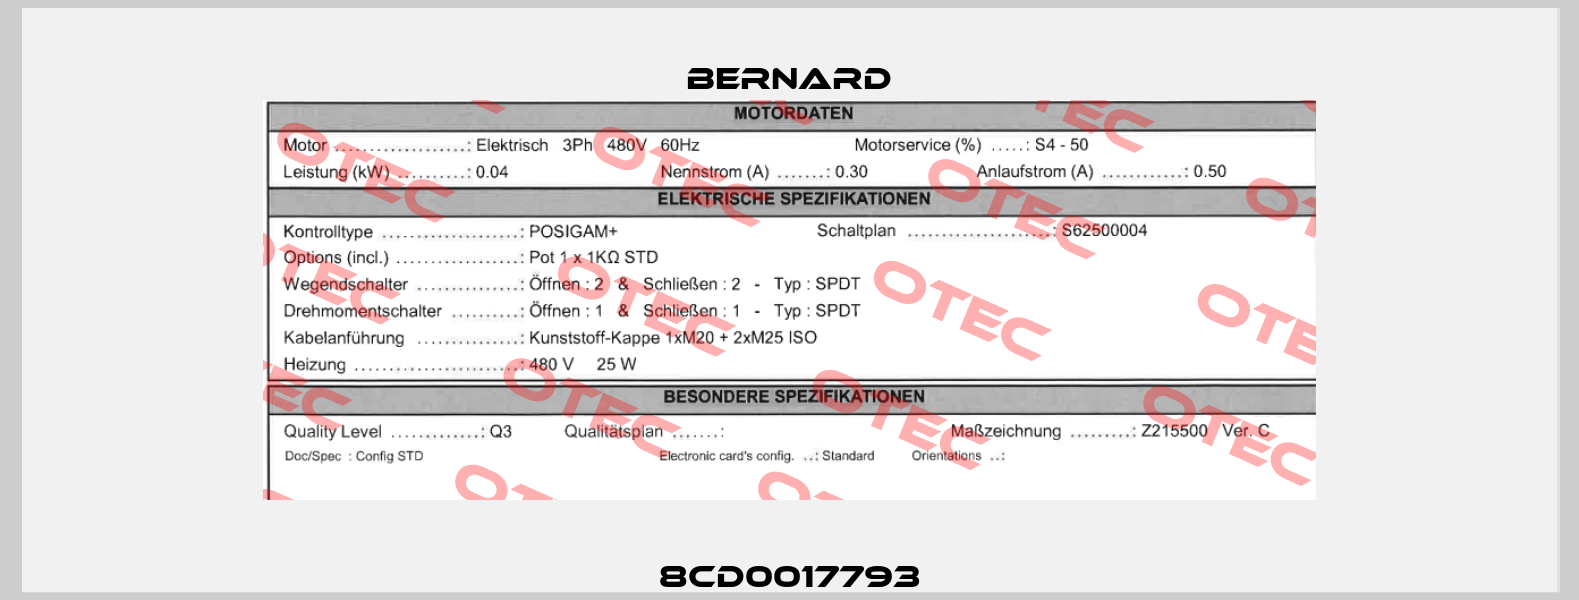 8CD0017793 Bernard